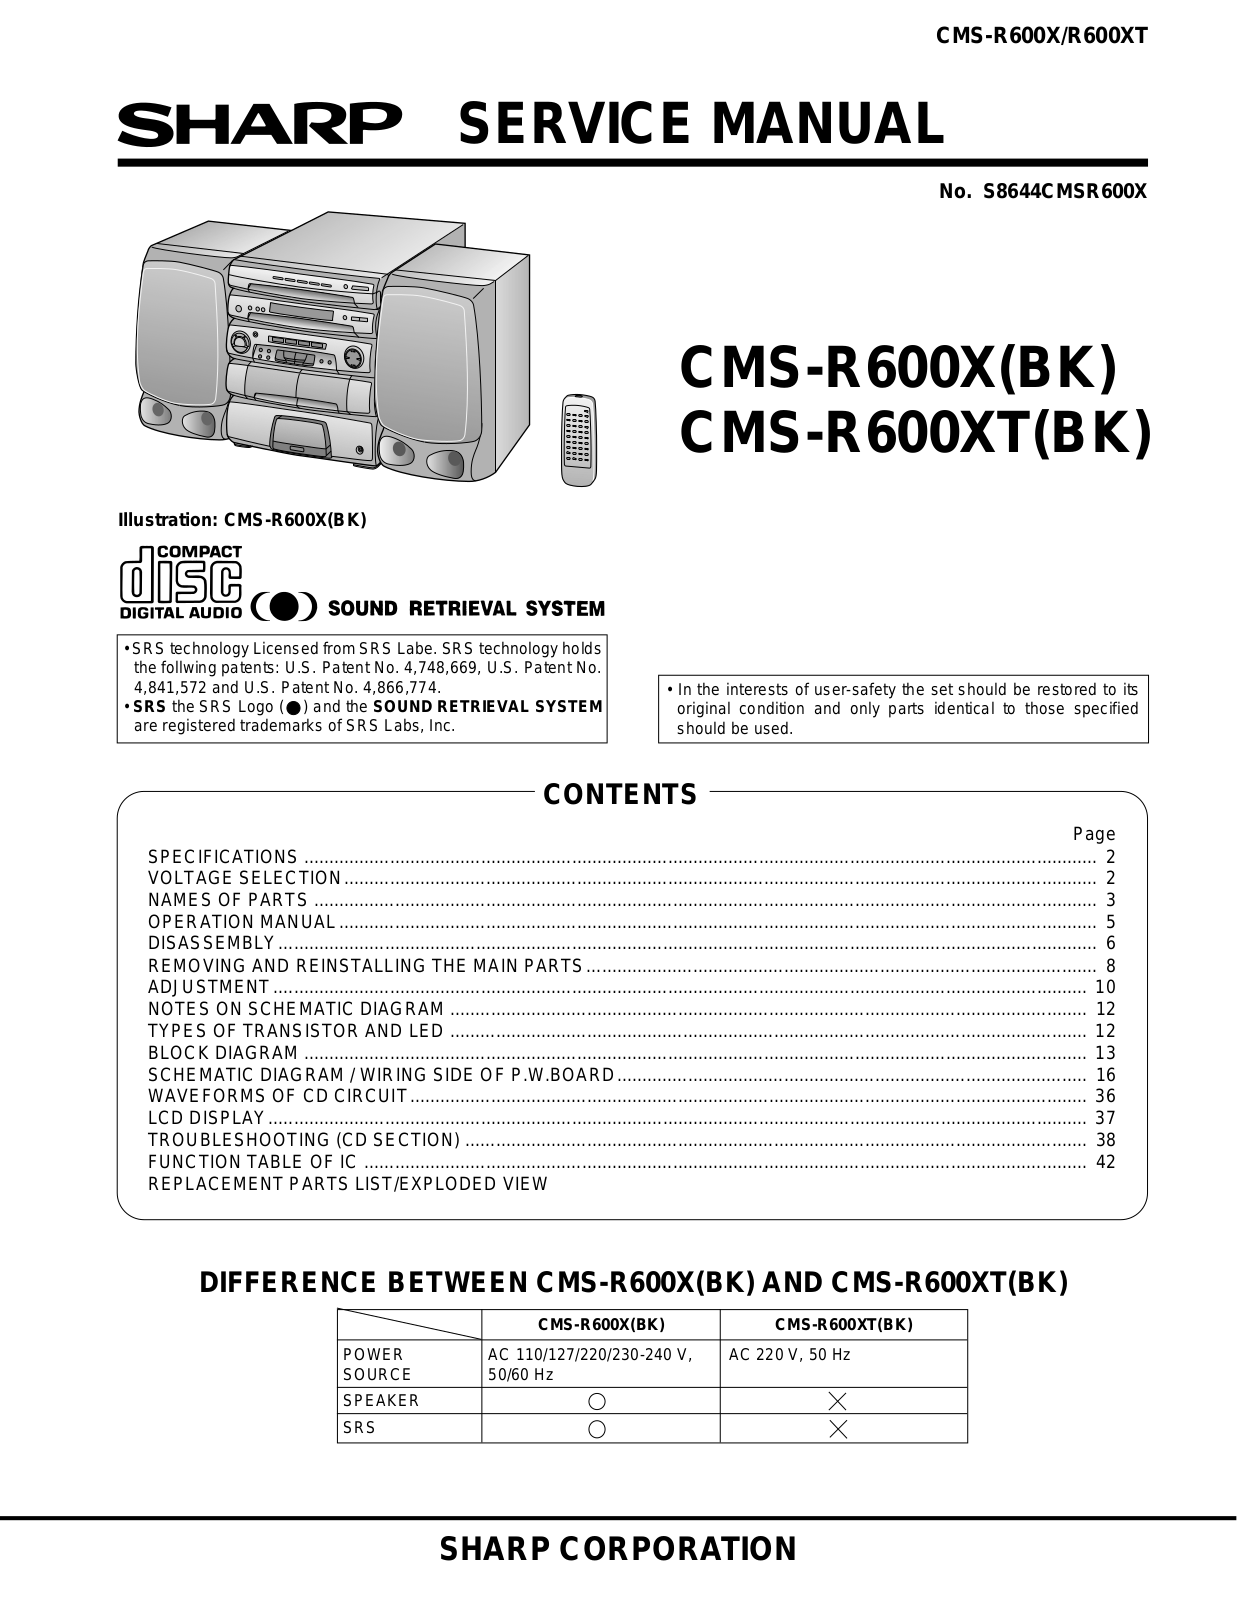 Sharp CMSR-600-X, CMSR-600-XT Service manual